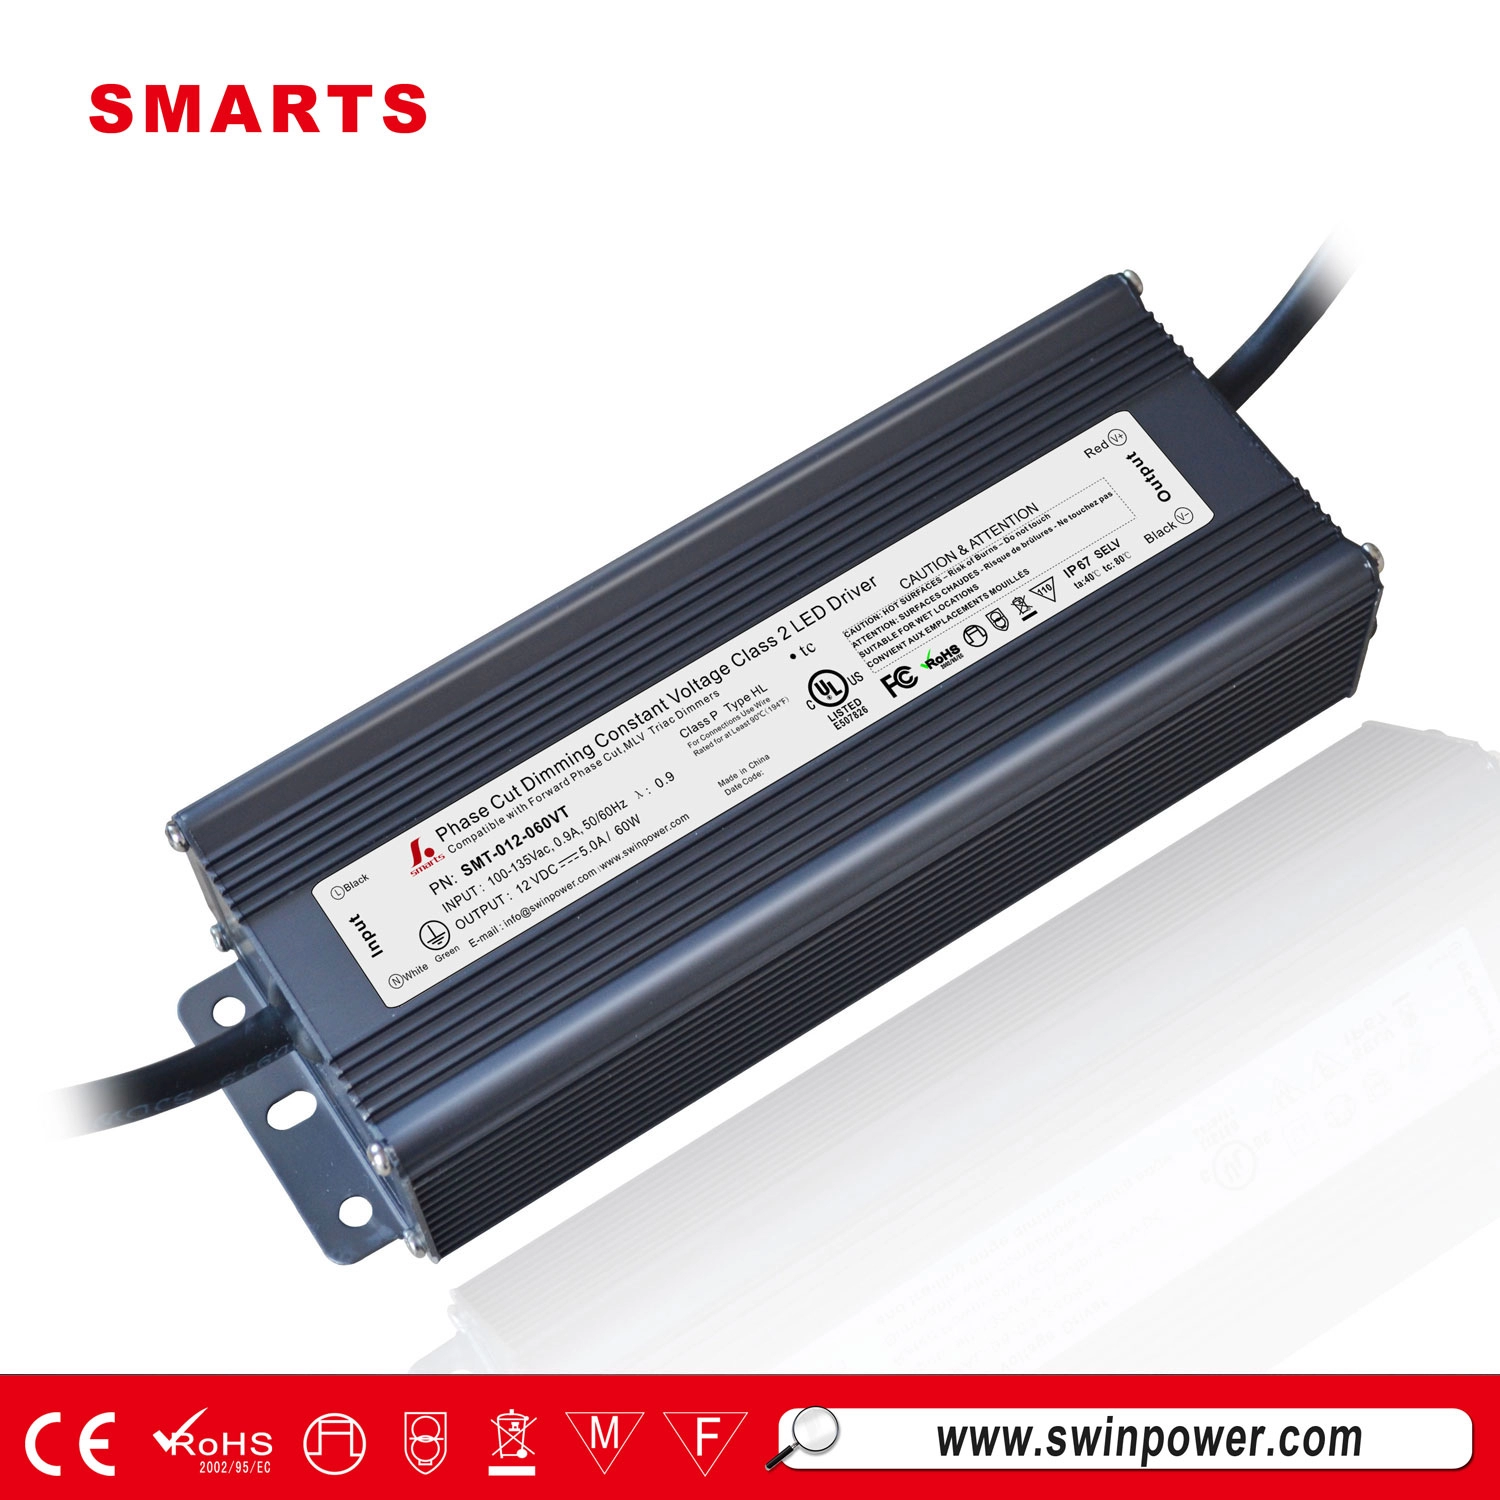 LED-Panel-Lichttreiber 12 V 60 W Triac dimmbares Konstantspannungs-LED-Netzteil